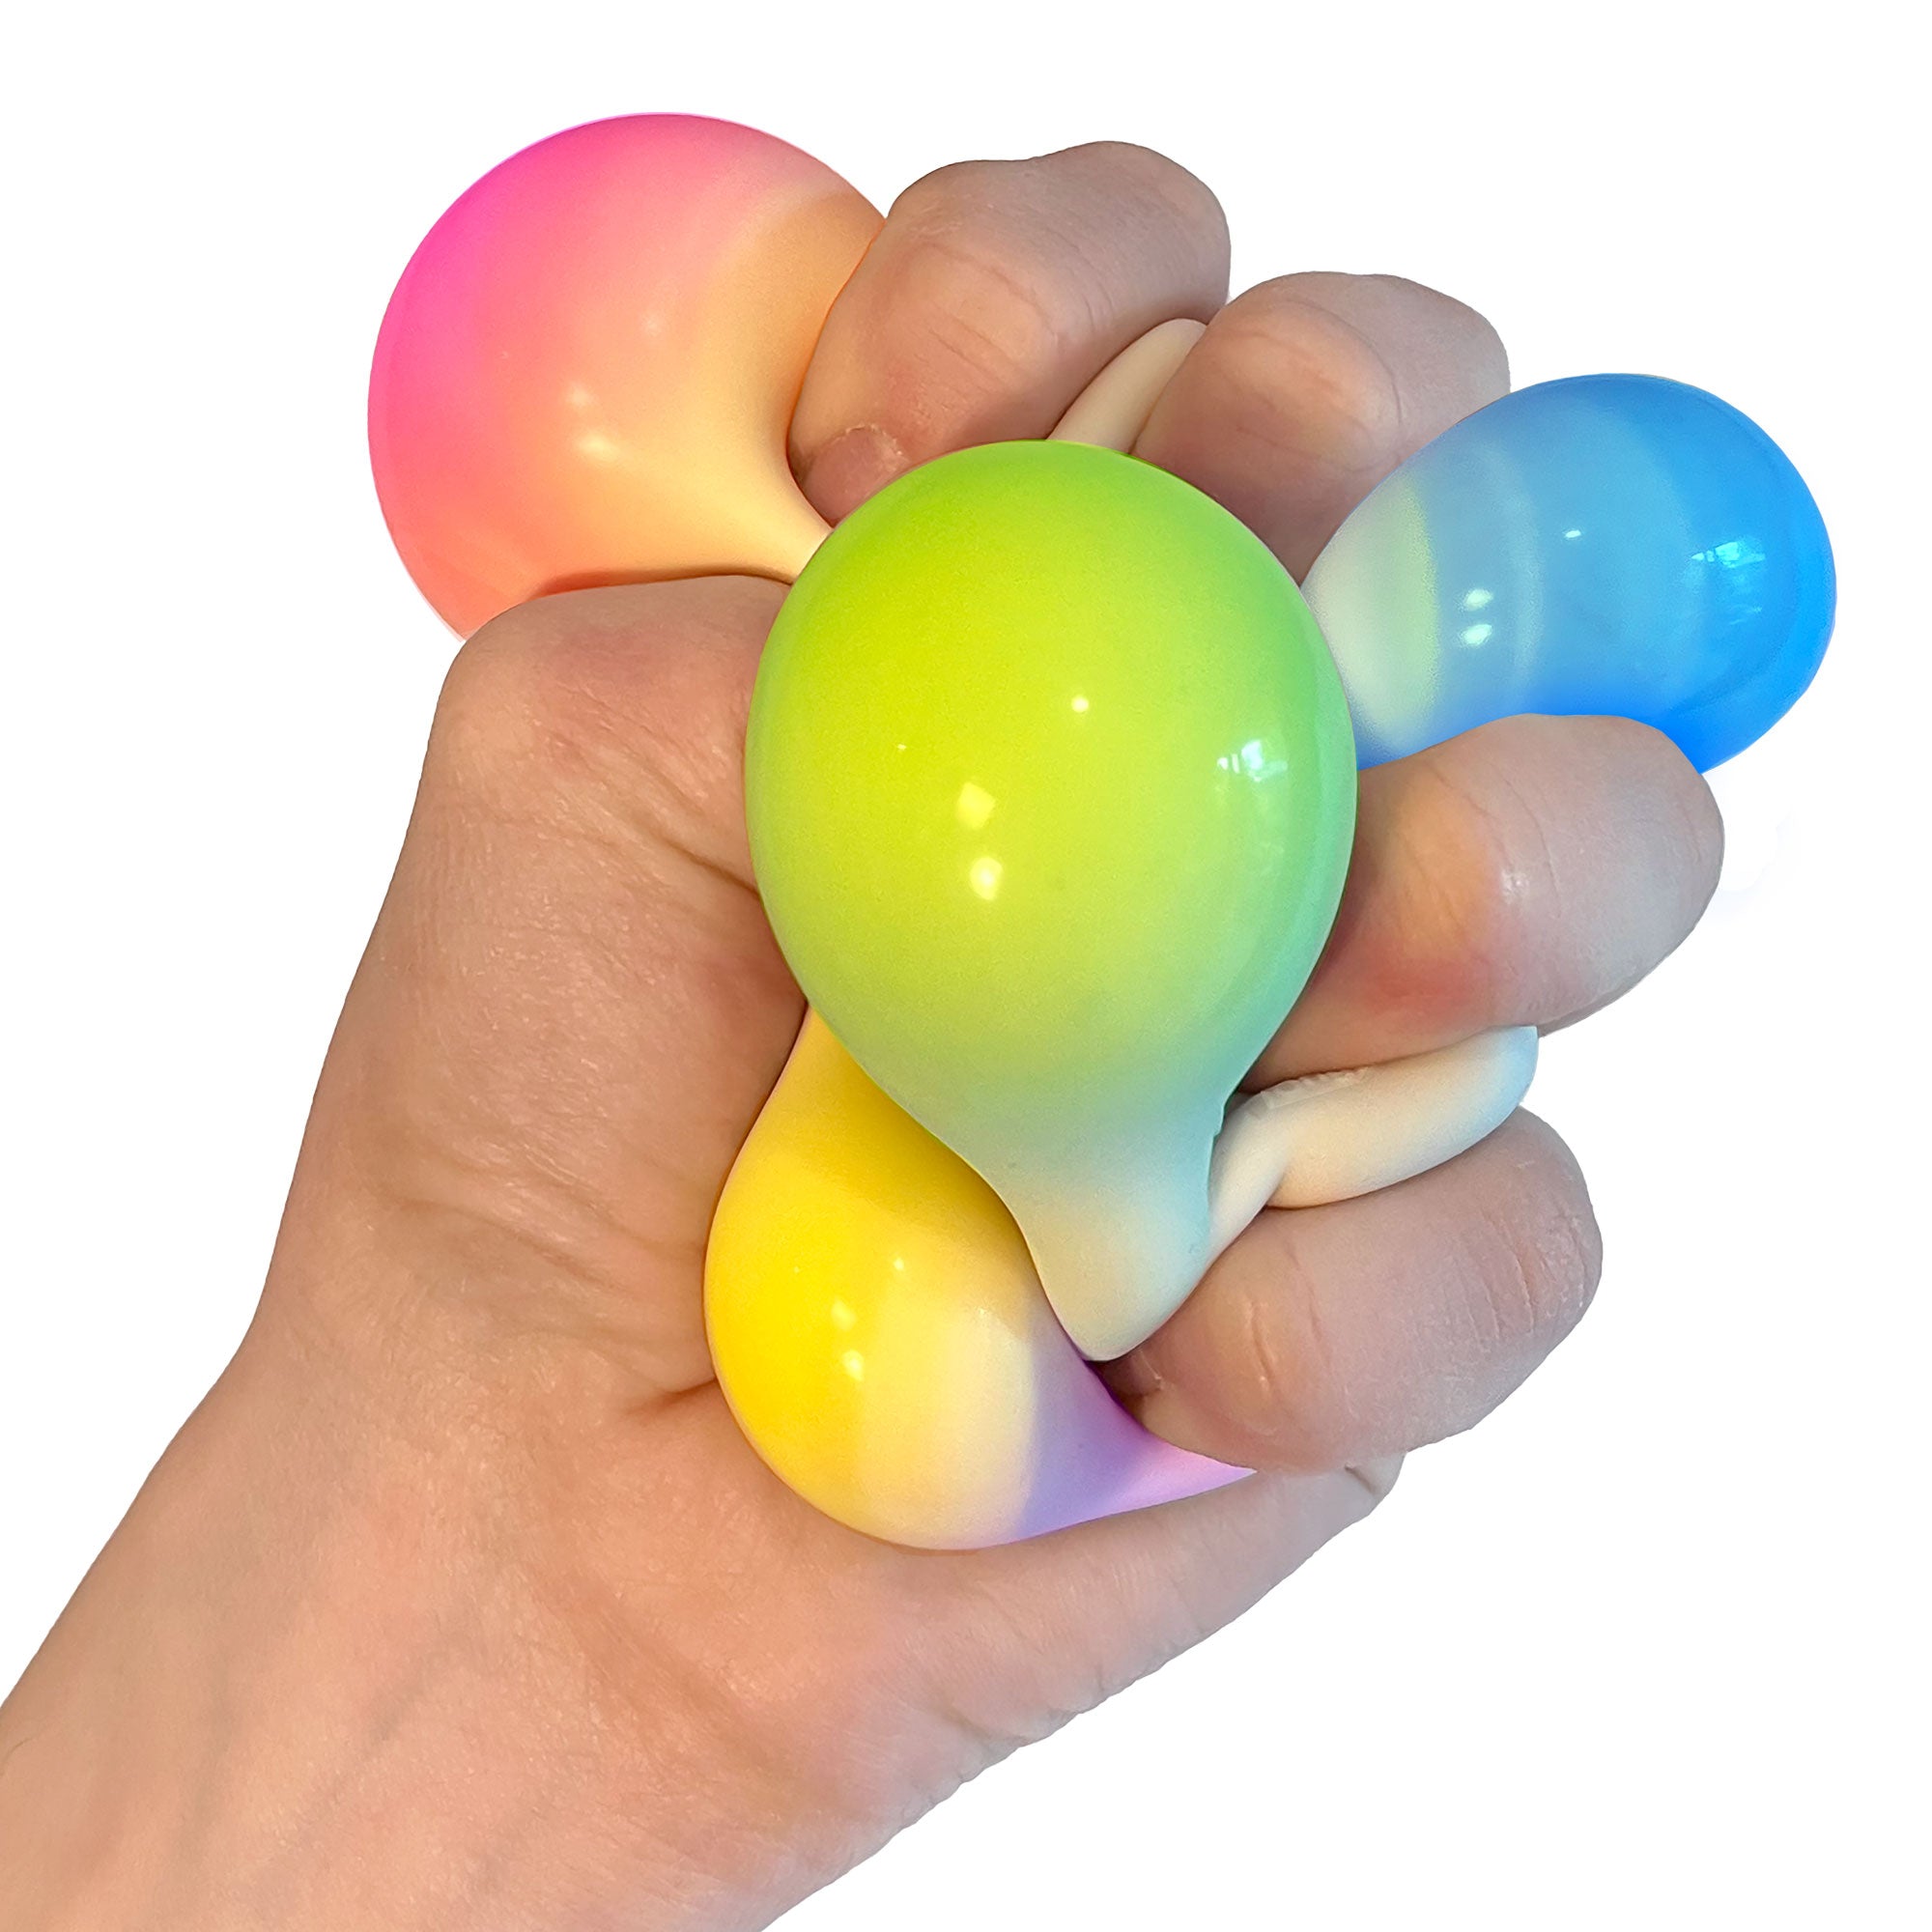 Nee Doh Magic Color Egg Sensory Toy - Assorted